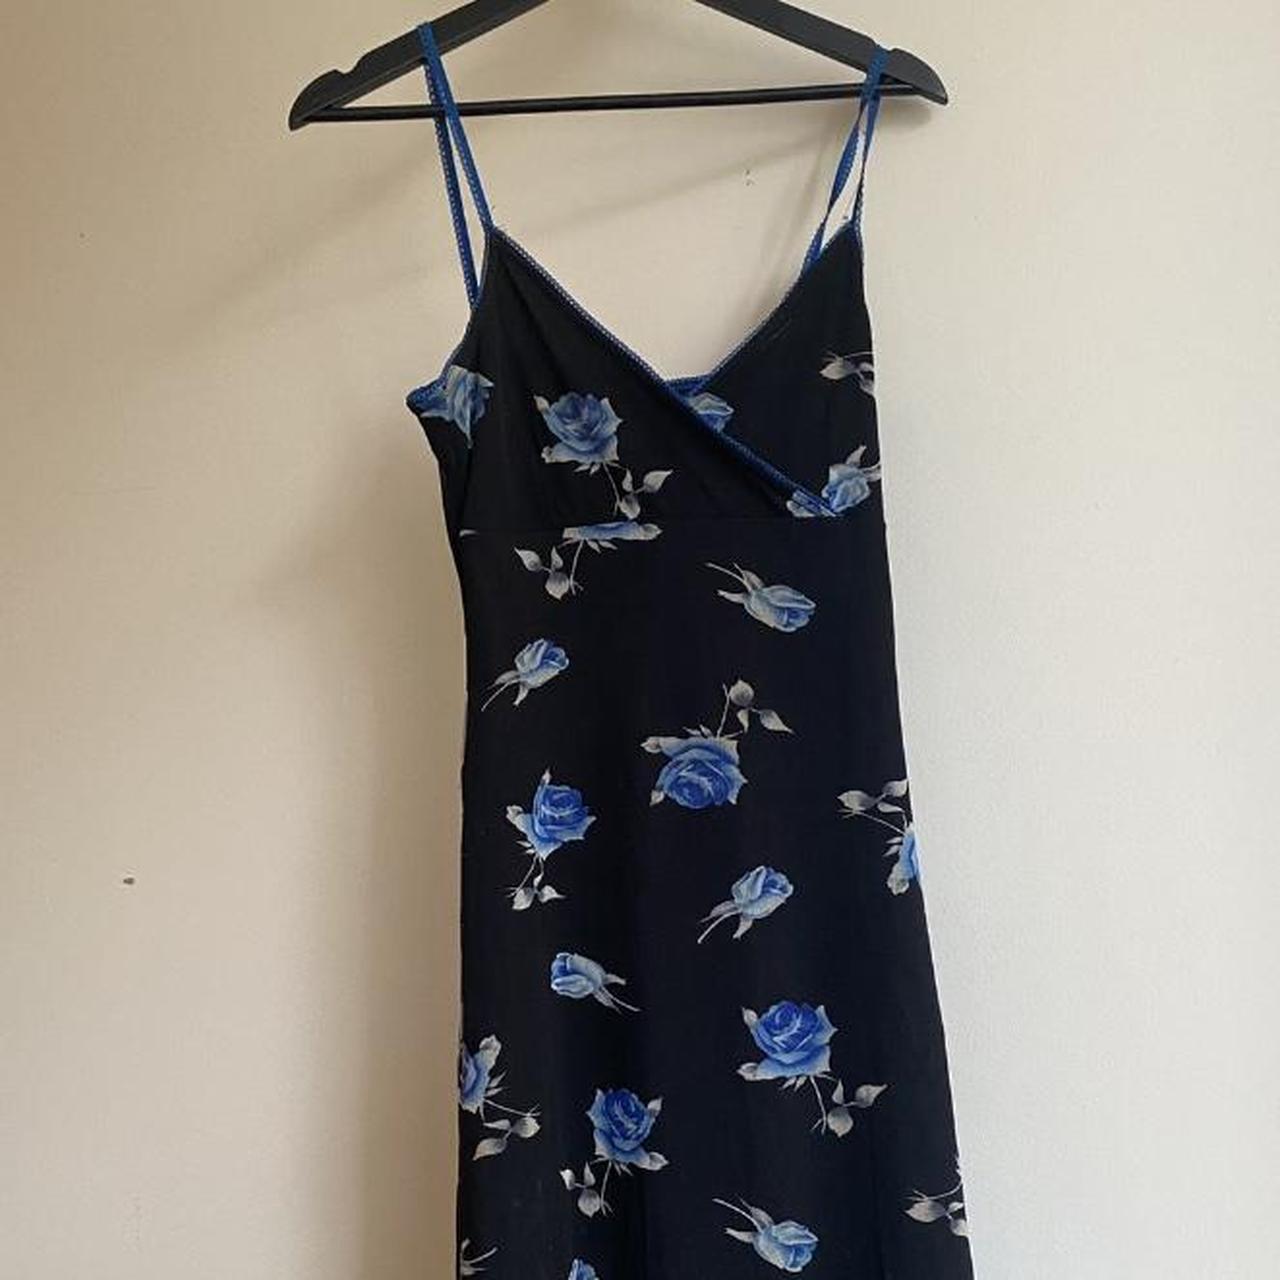 Vintage electric blue flower dress. Fits an 8-12... - Depop